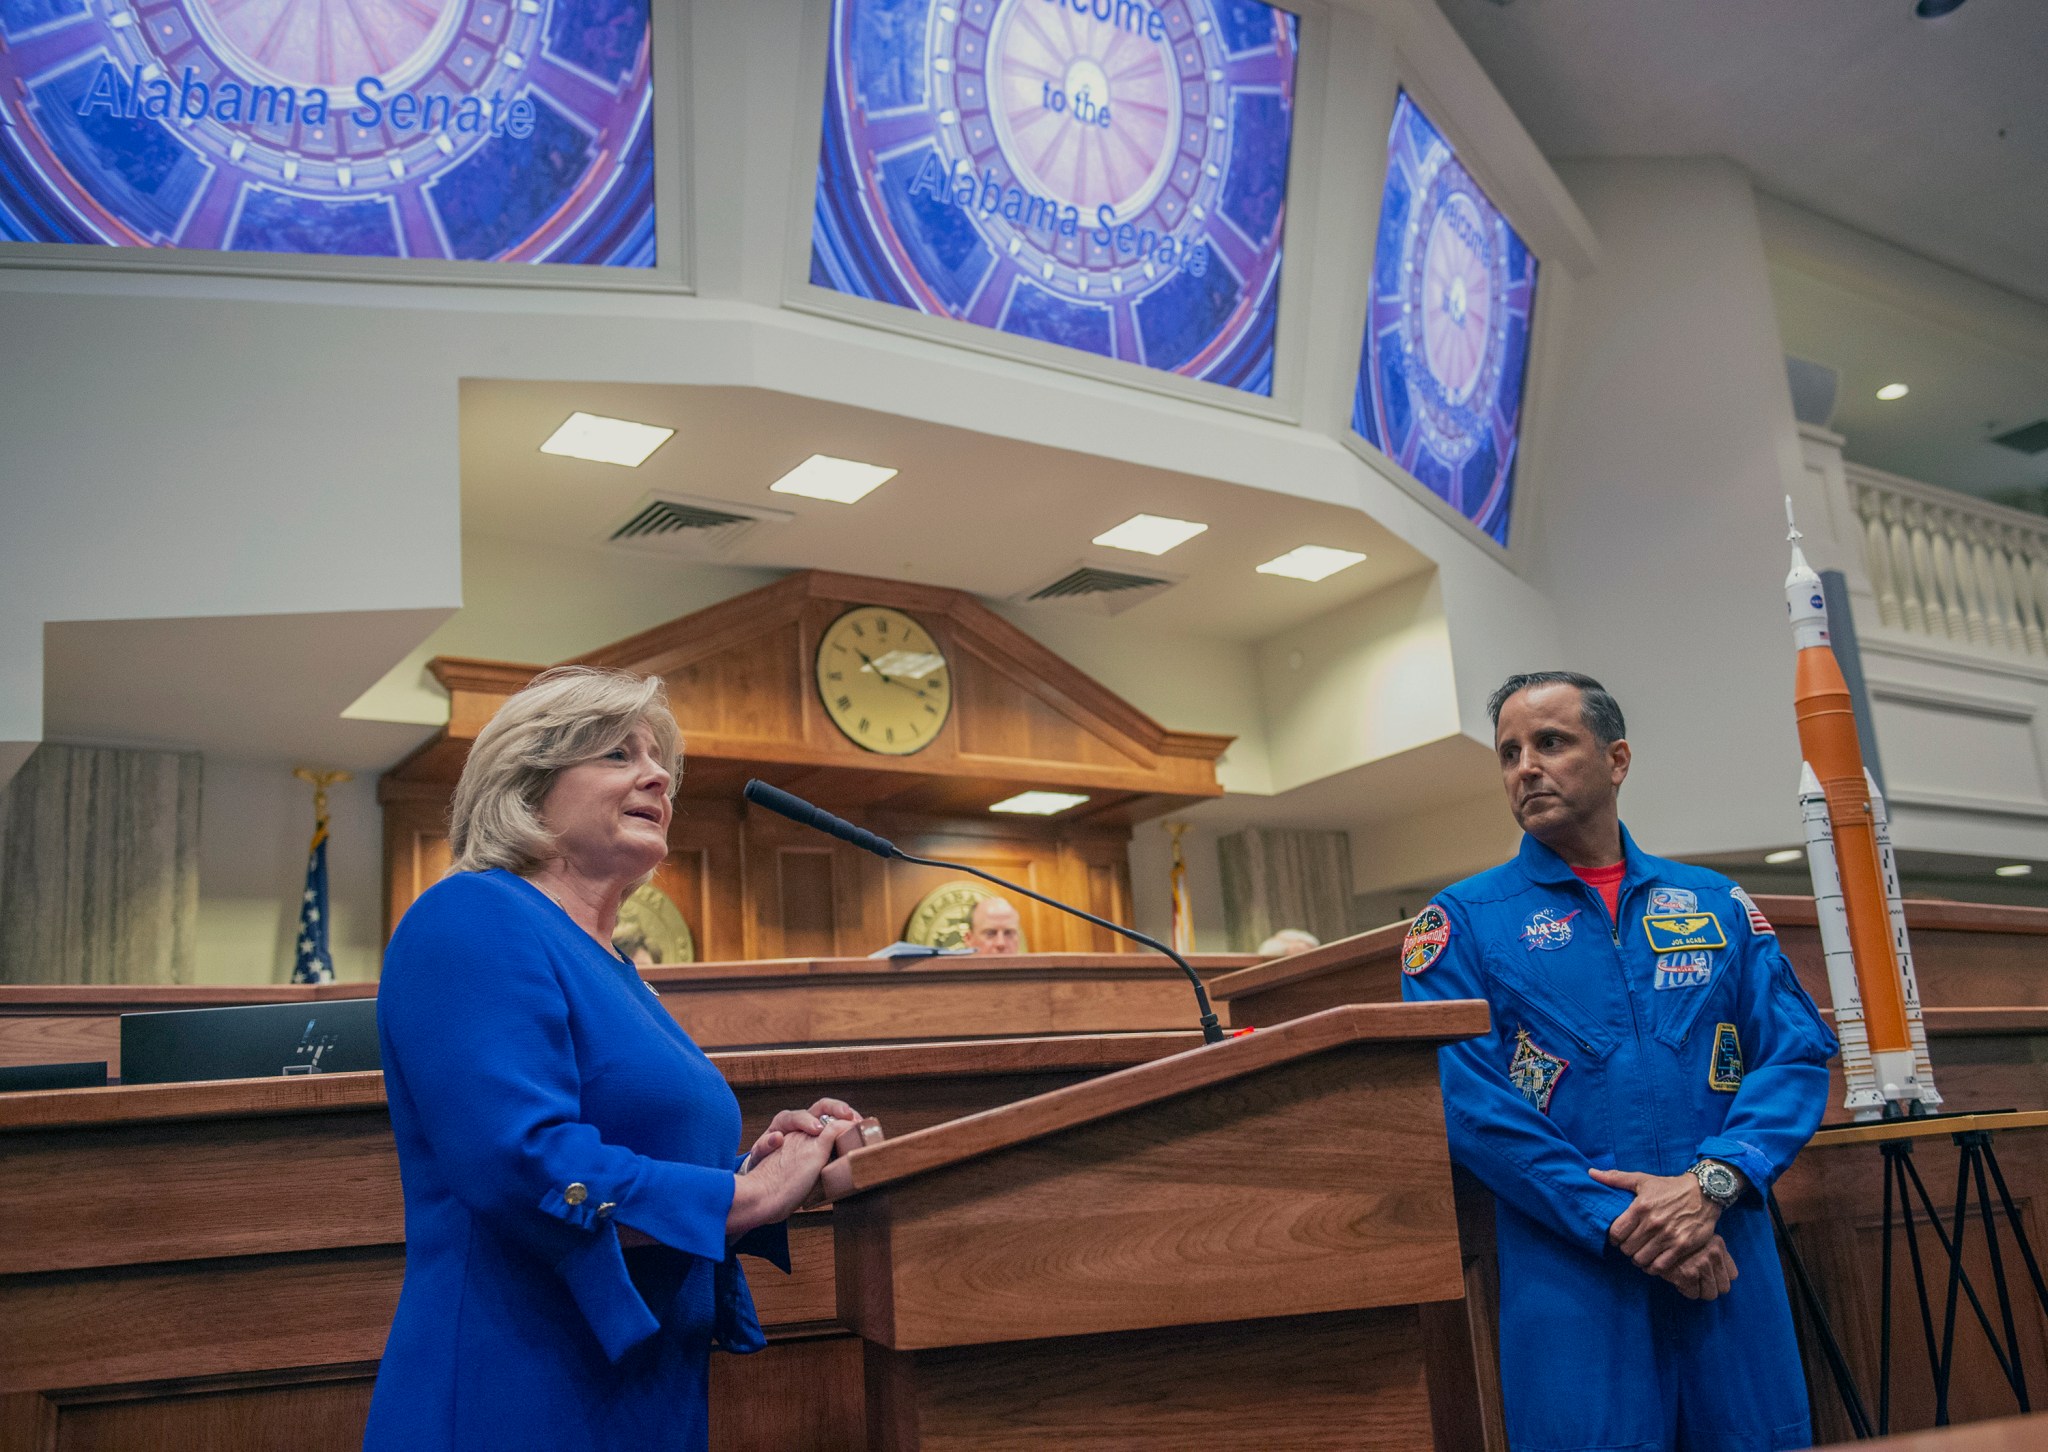 NASA Marshall Space Flight Center Director Jody Singer, left, and astronaut Joe Acaba address the Alabama State Senate.